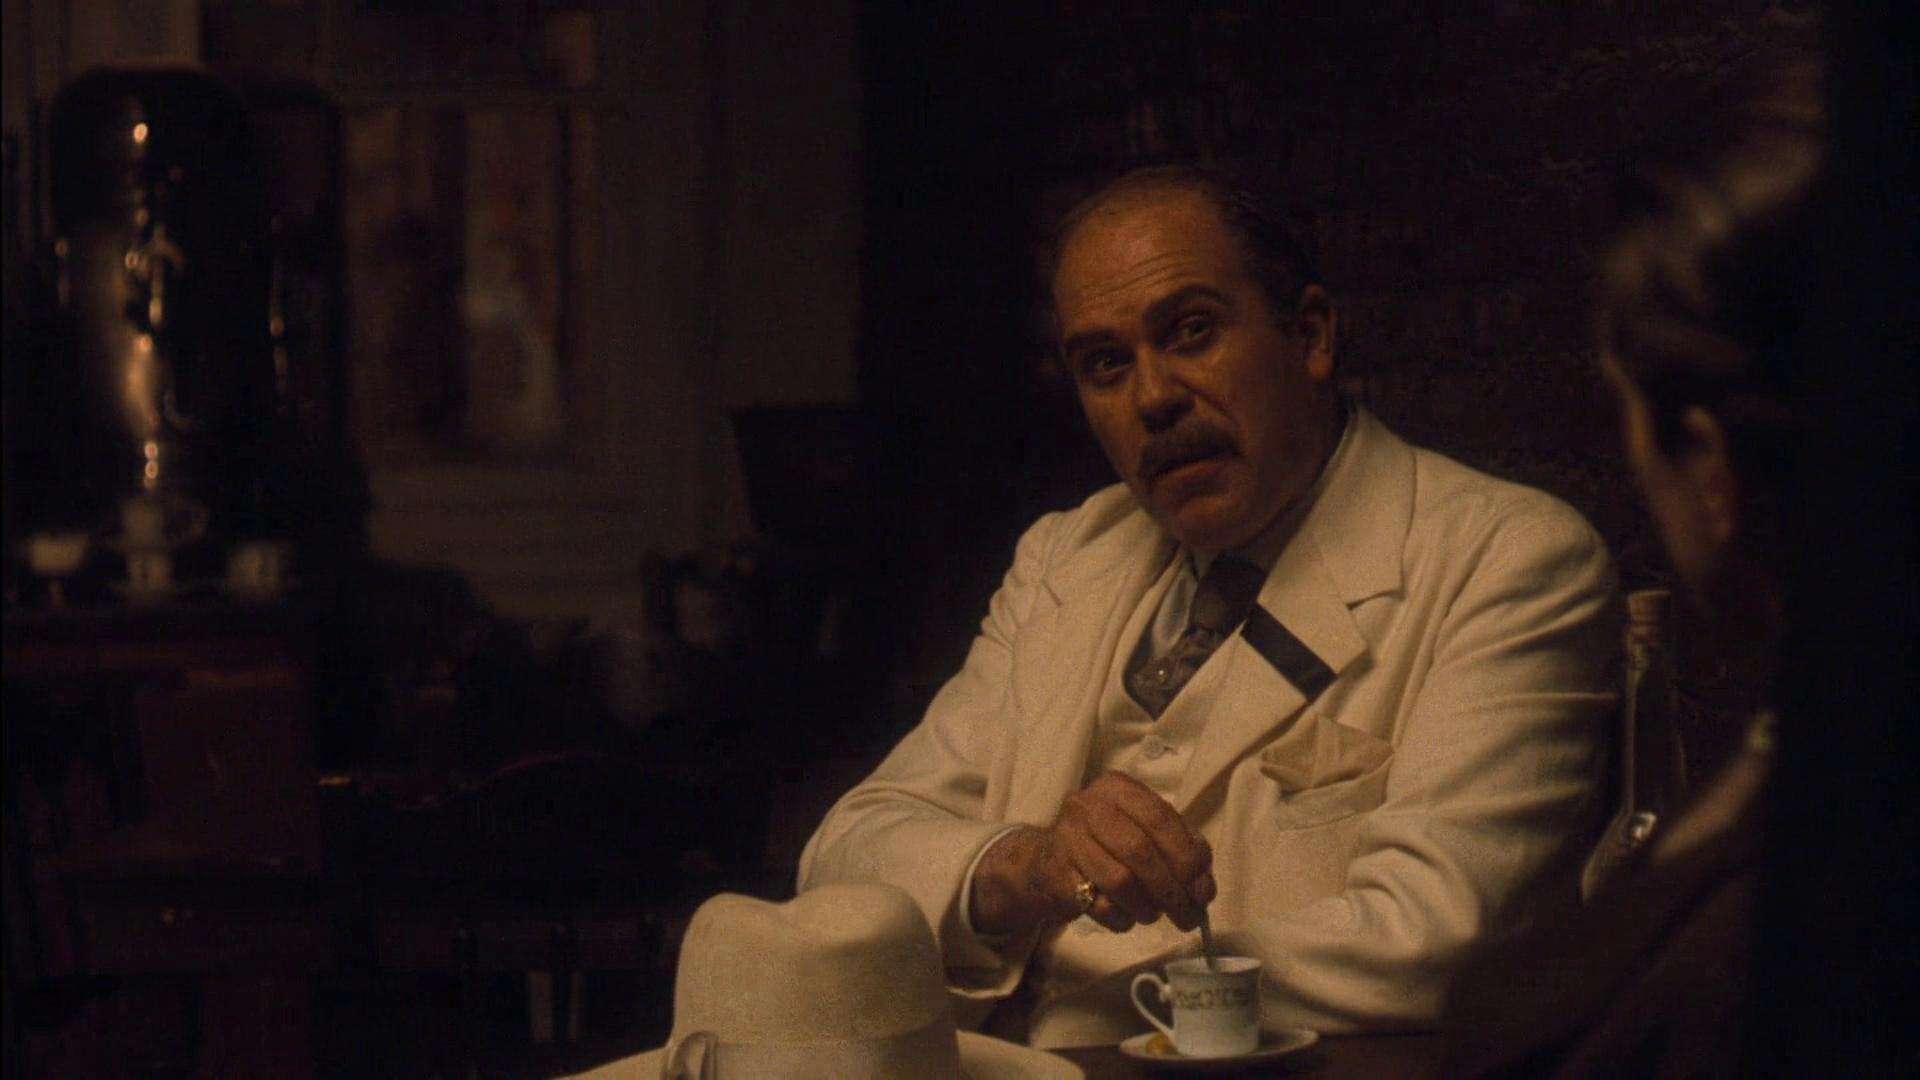 Robert De Niro and Gastone Moschin in The Godfather Part II (1974)